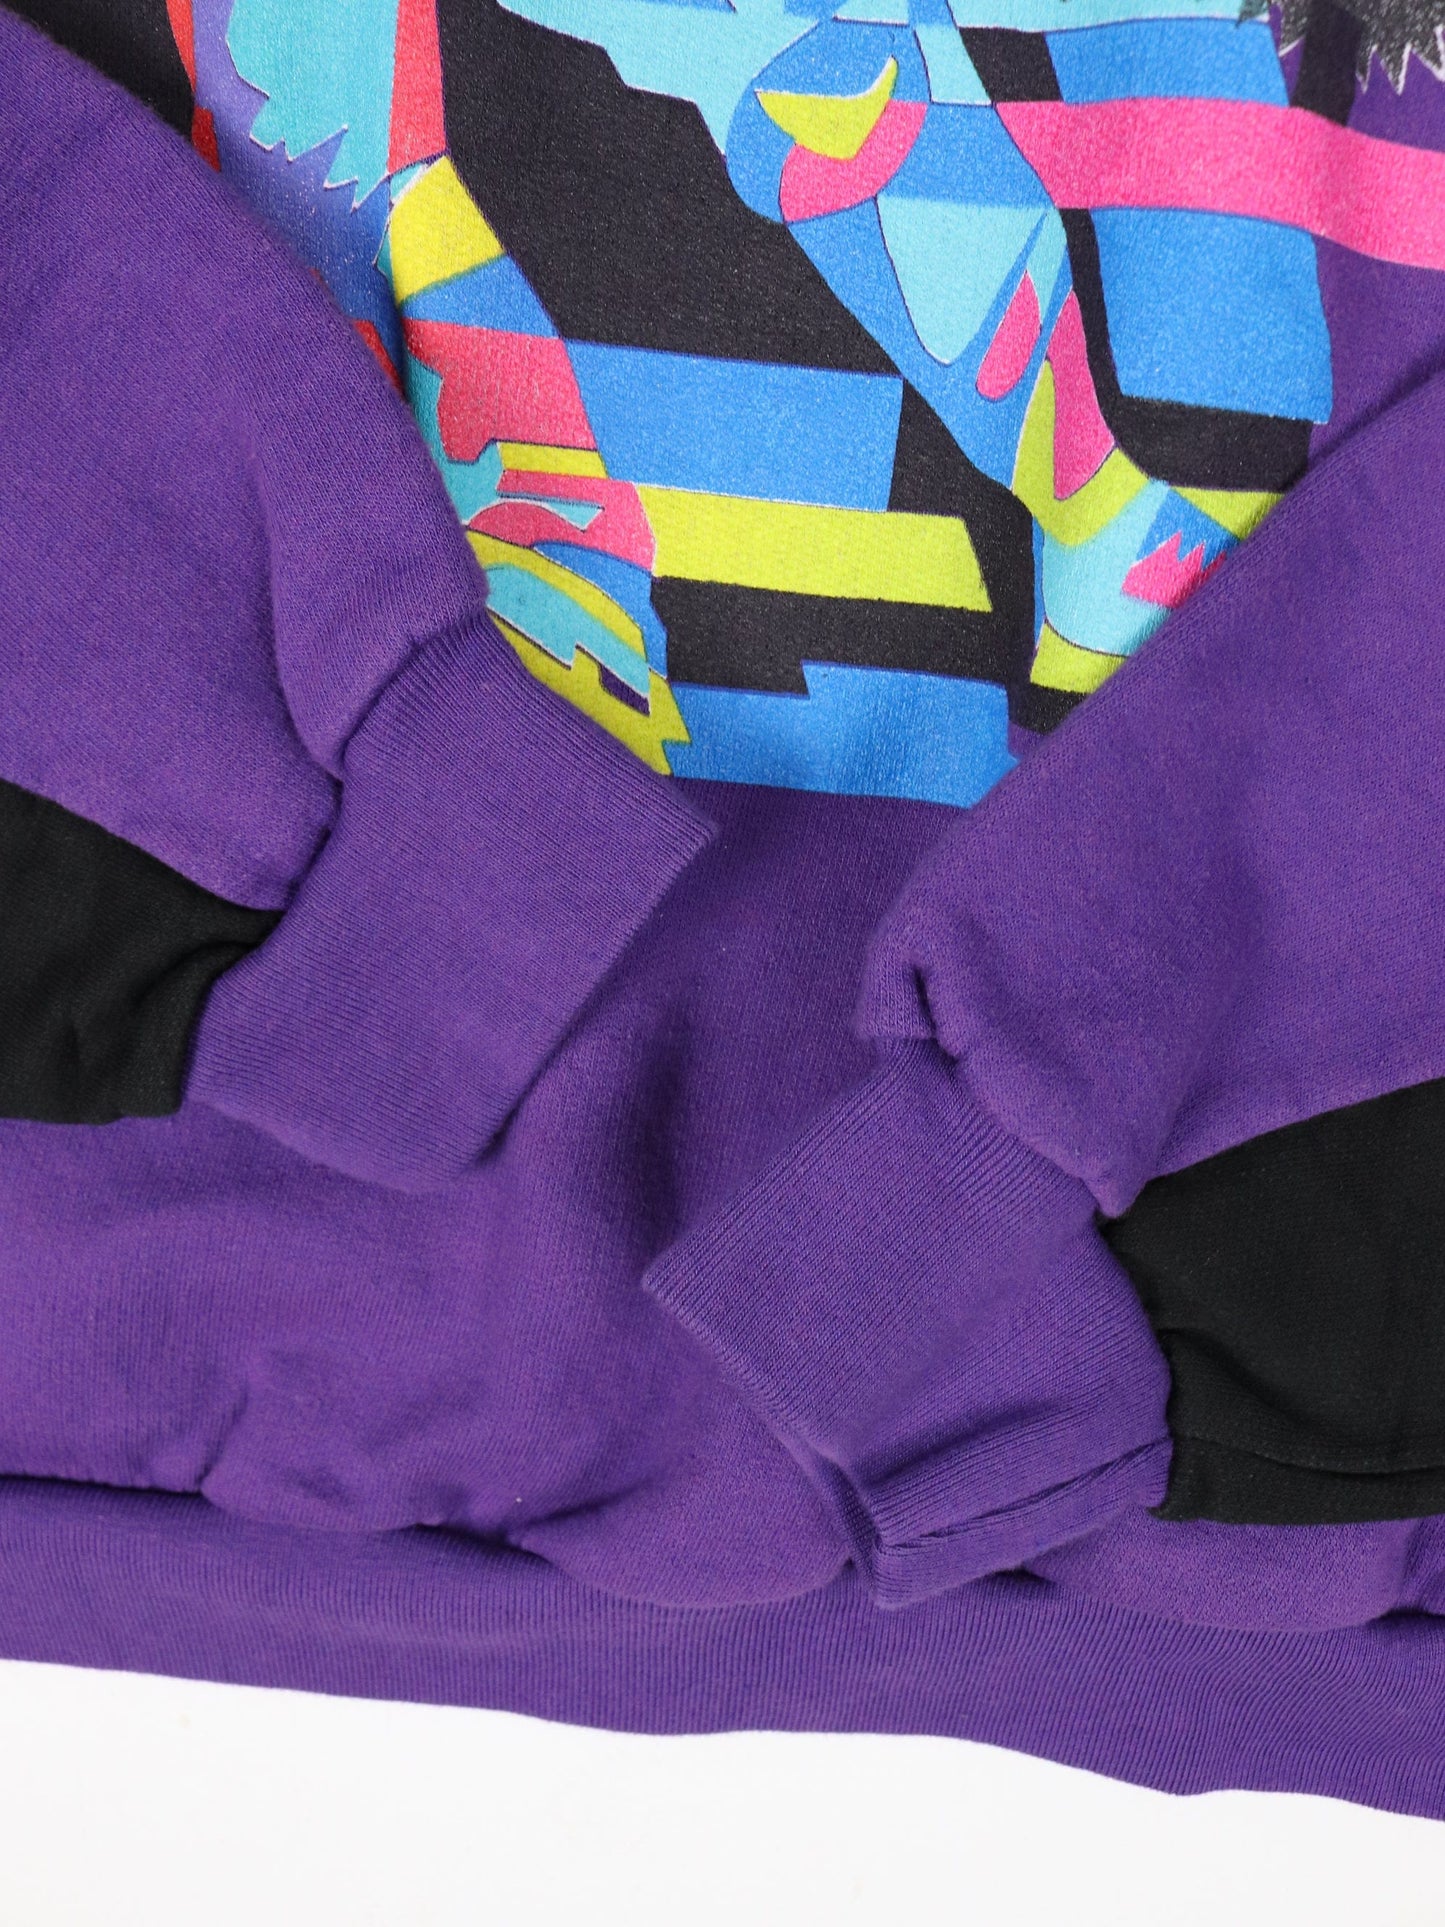 Other Sweatshirts & Hoodies Vintage Team Impact Sweatshirt Mens Small Purple Hockey 90s Geometric